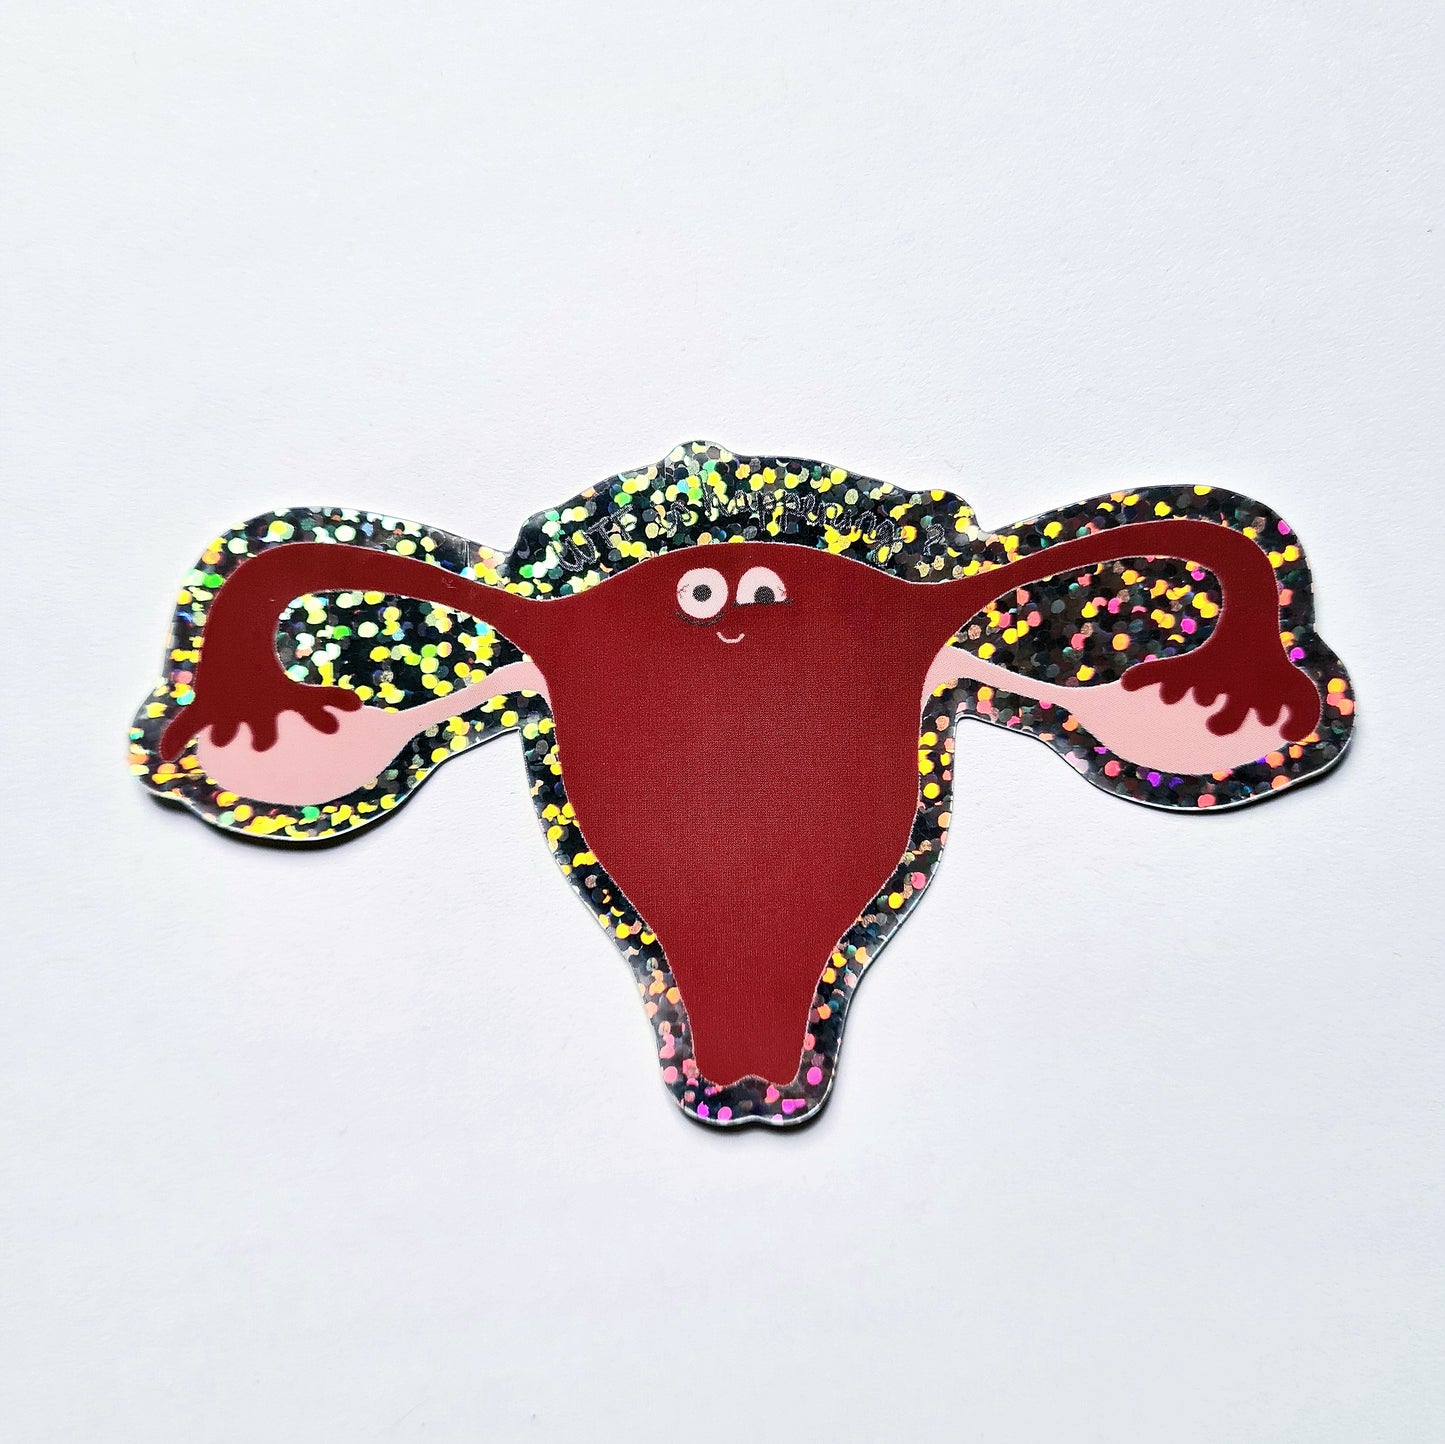 Uterus Sticker